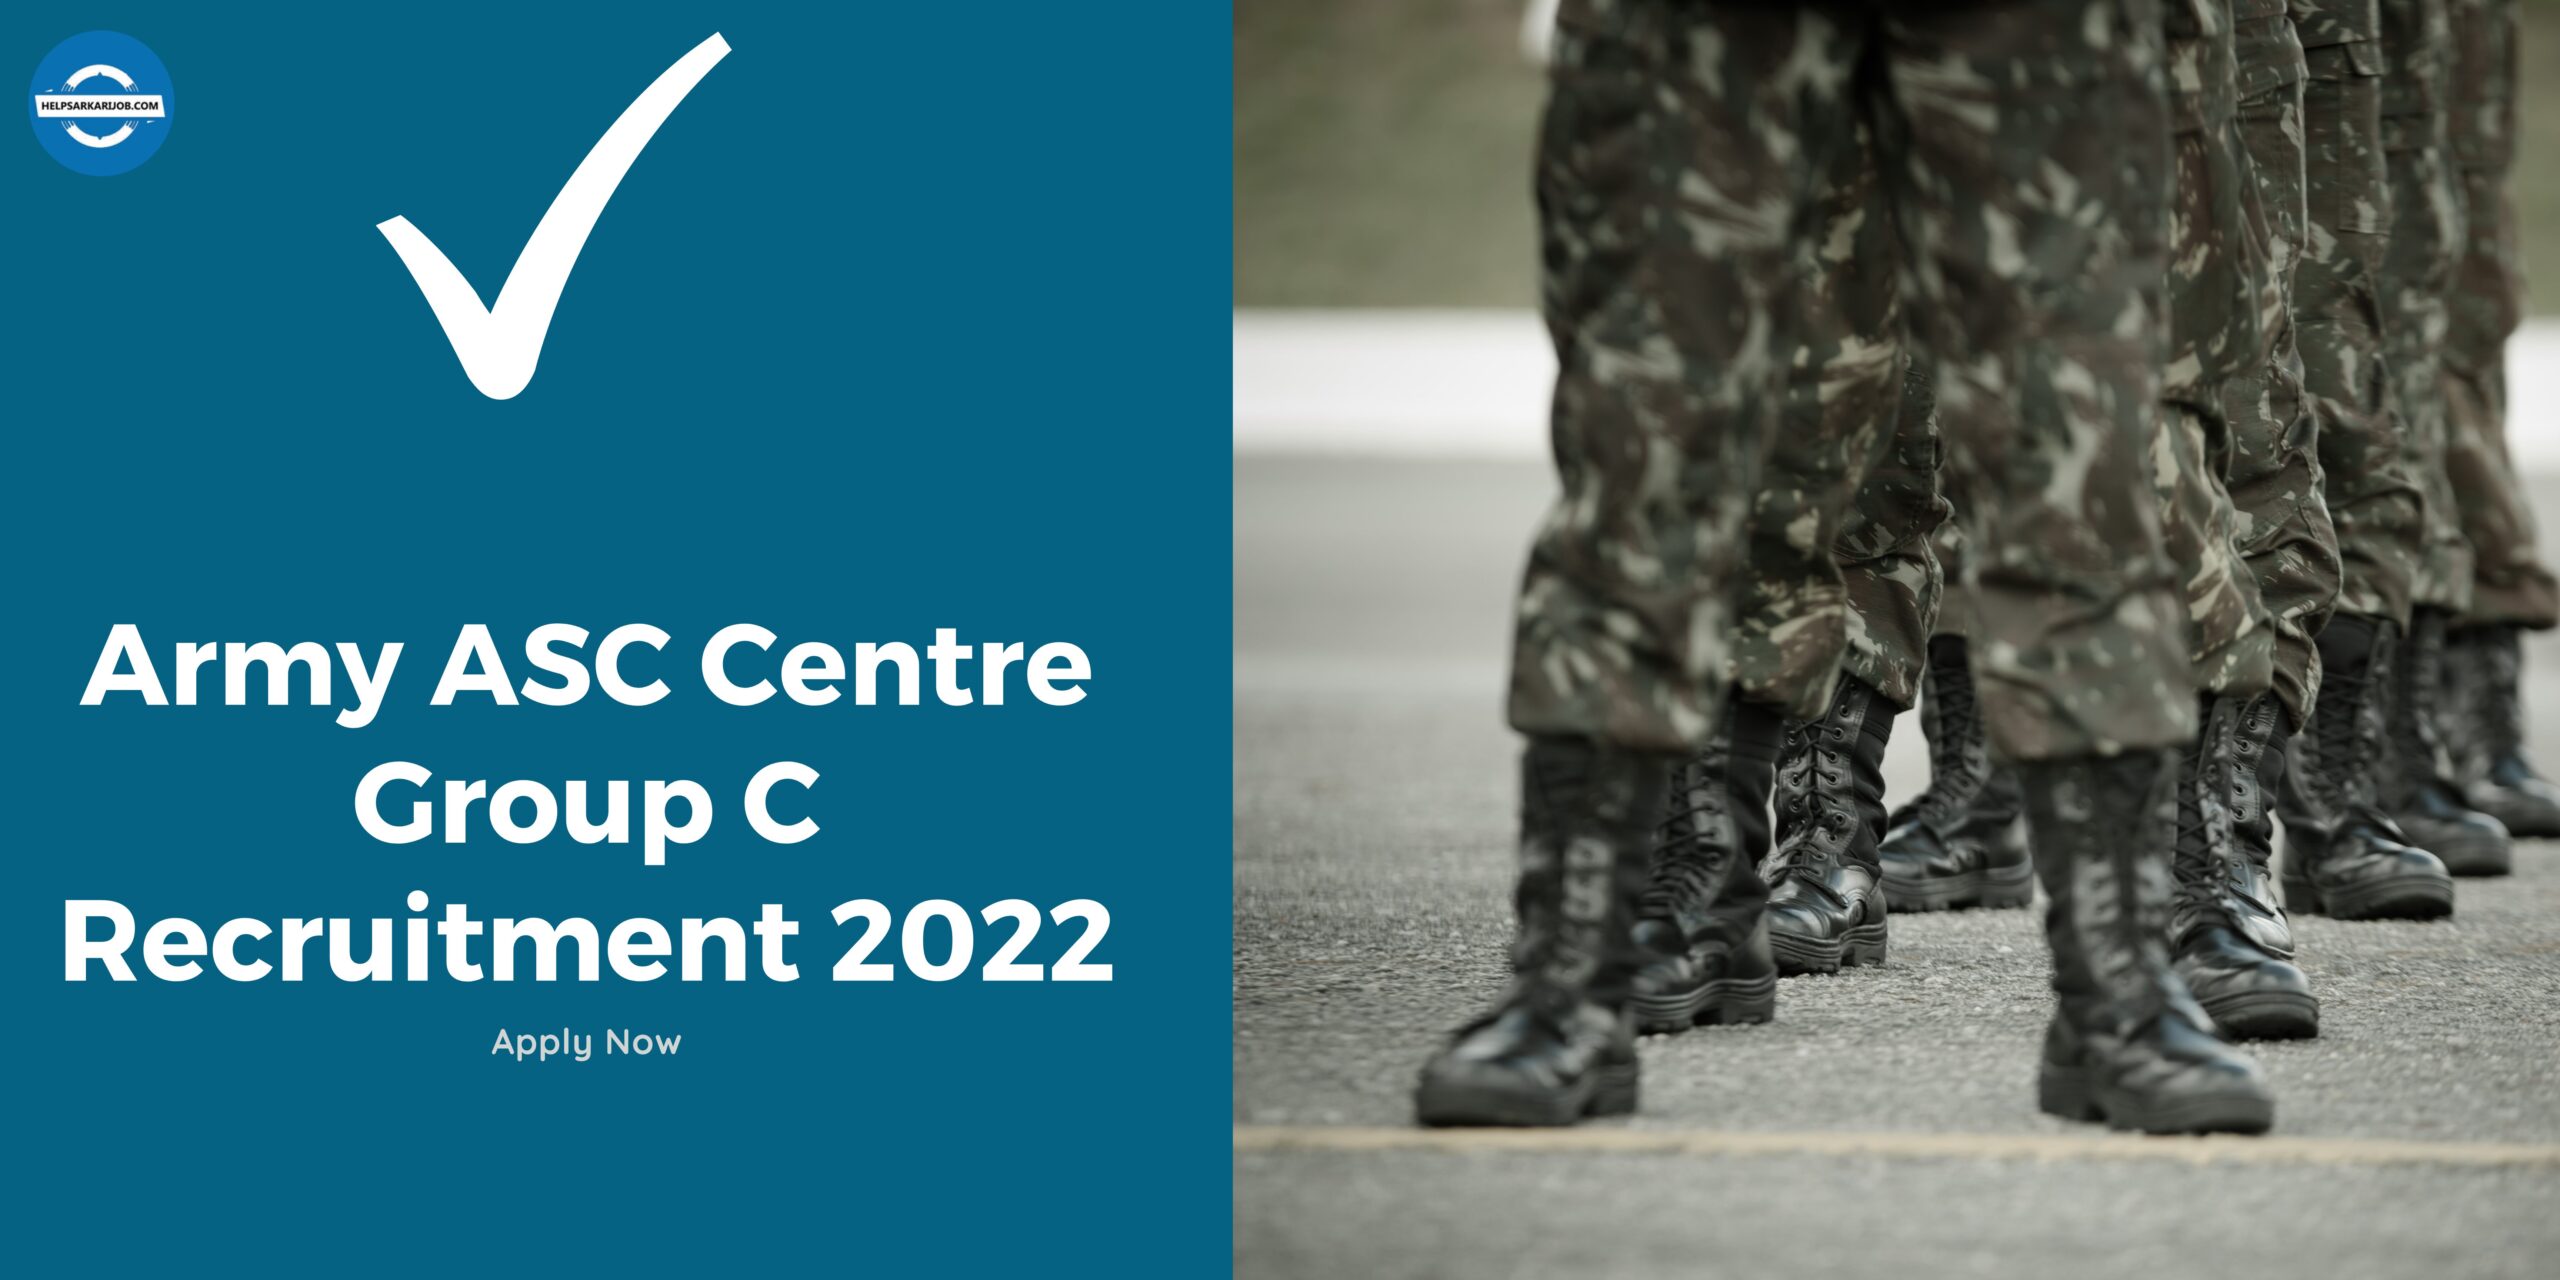 Army ASC Centre Group C Recruitment 2022